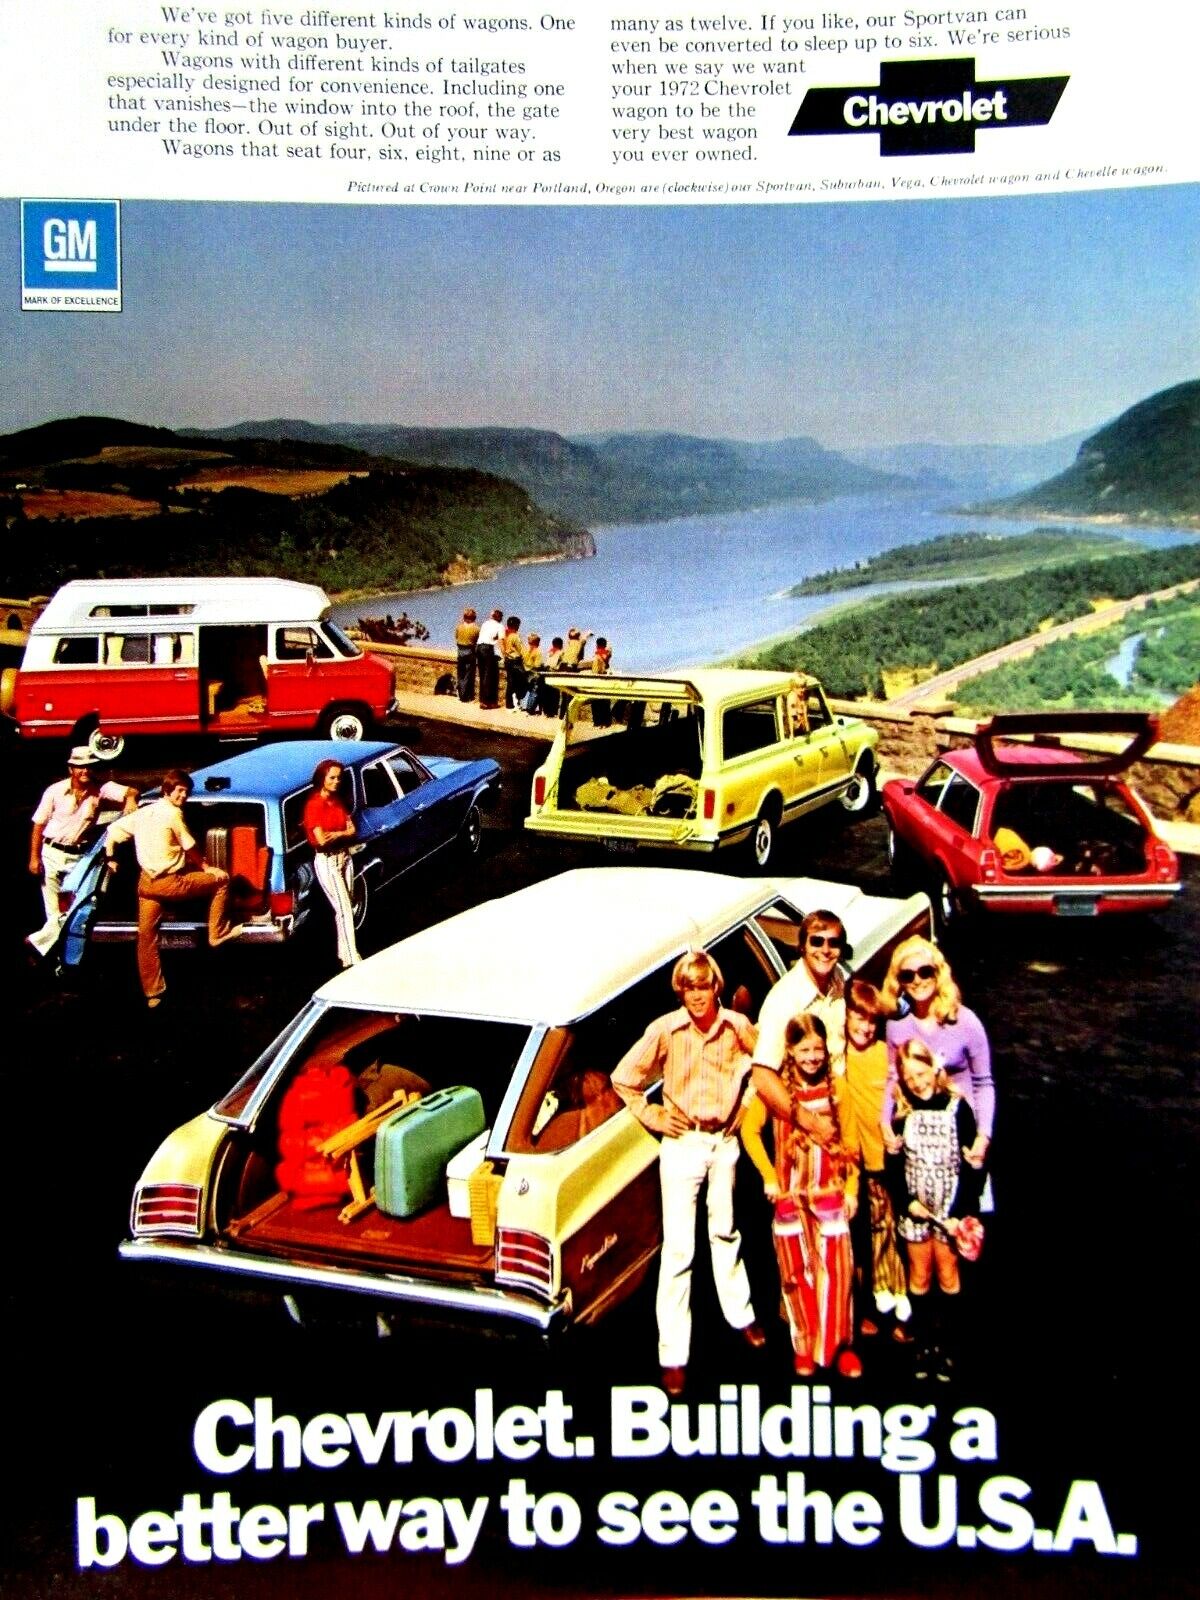 1972 Chevrolet Wagons At Crown Point Portland Oregon Vintage Original Print Ad